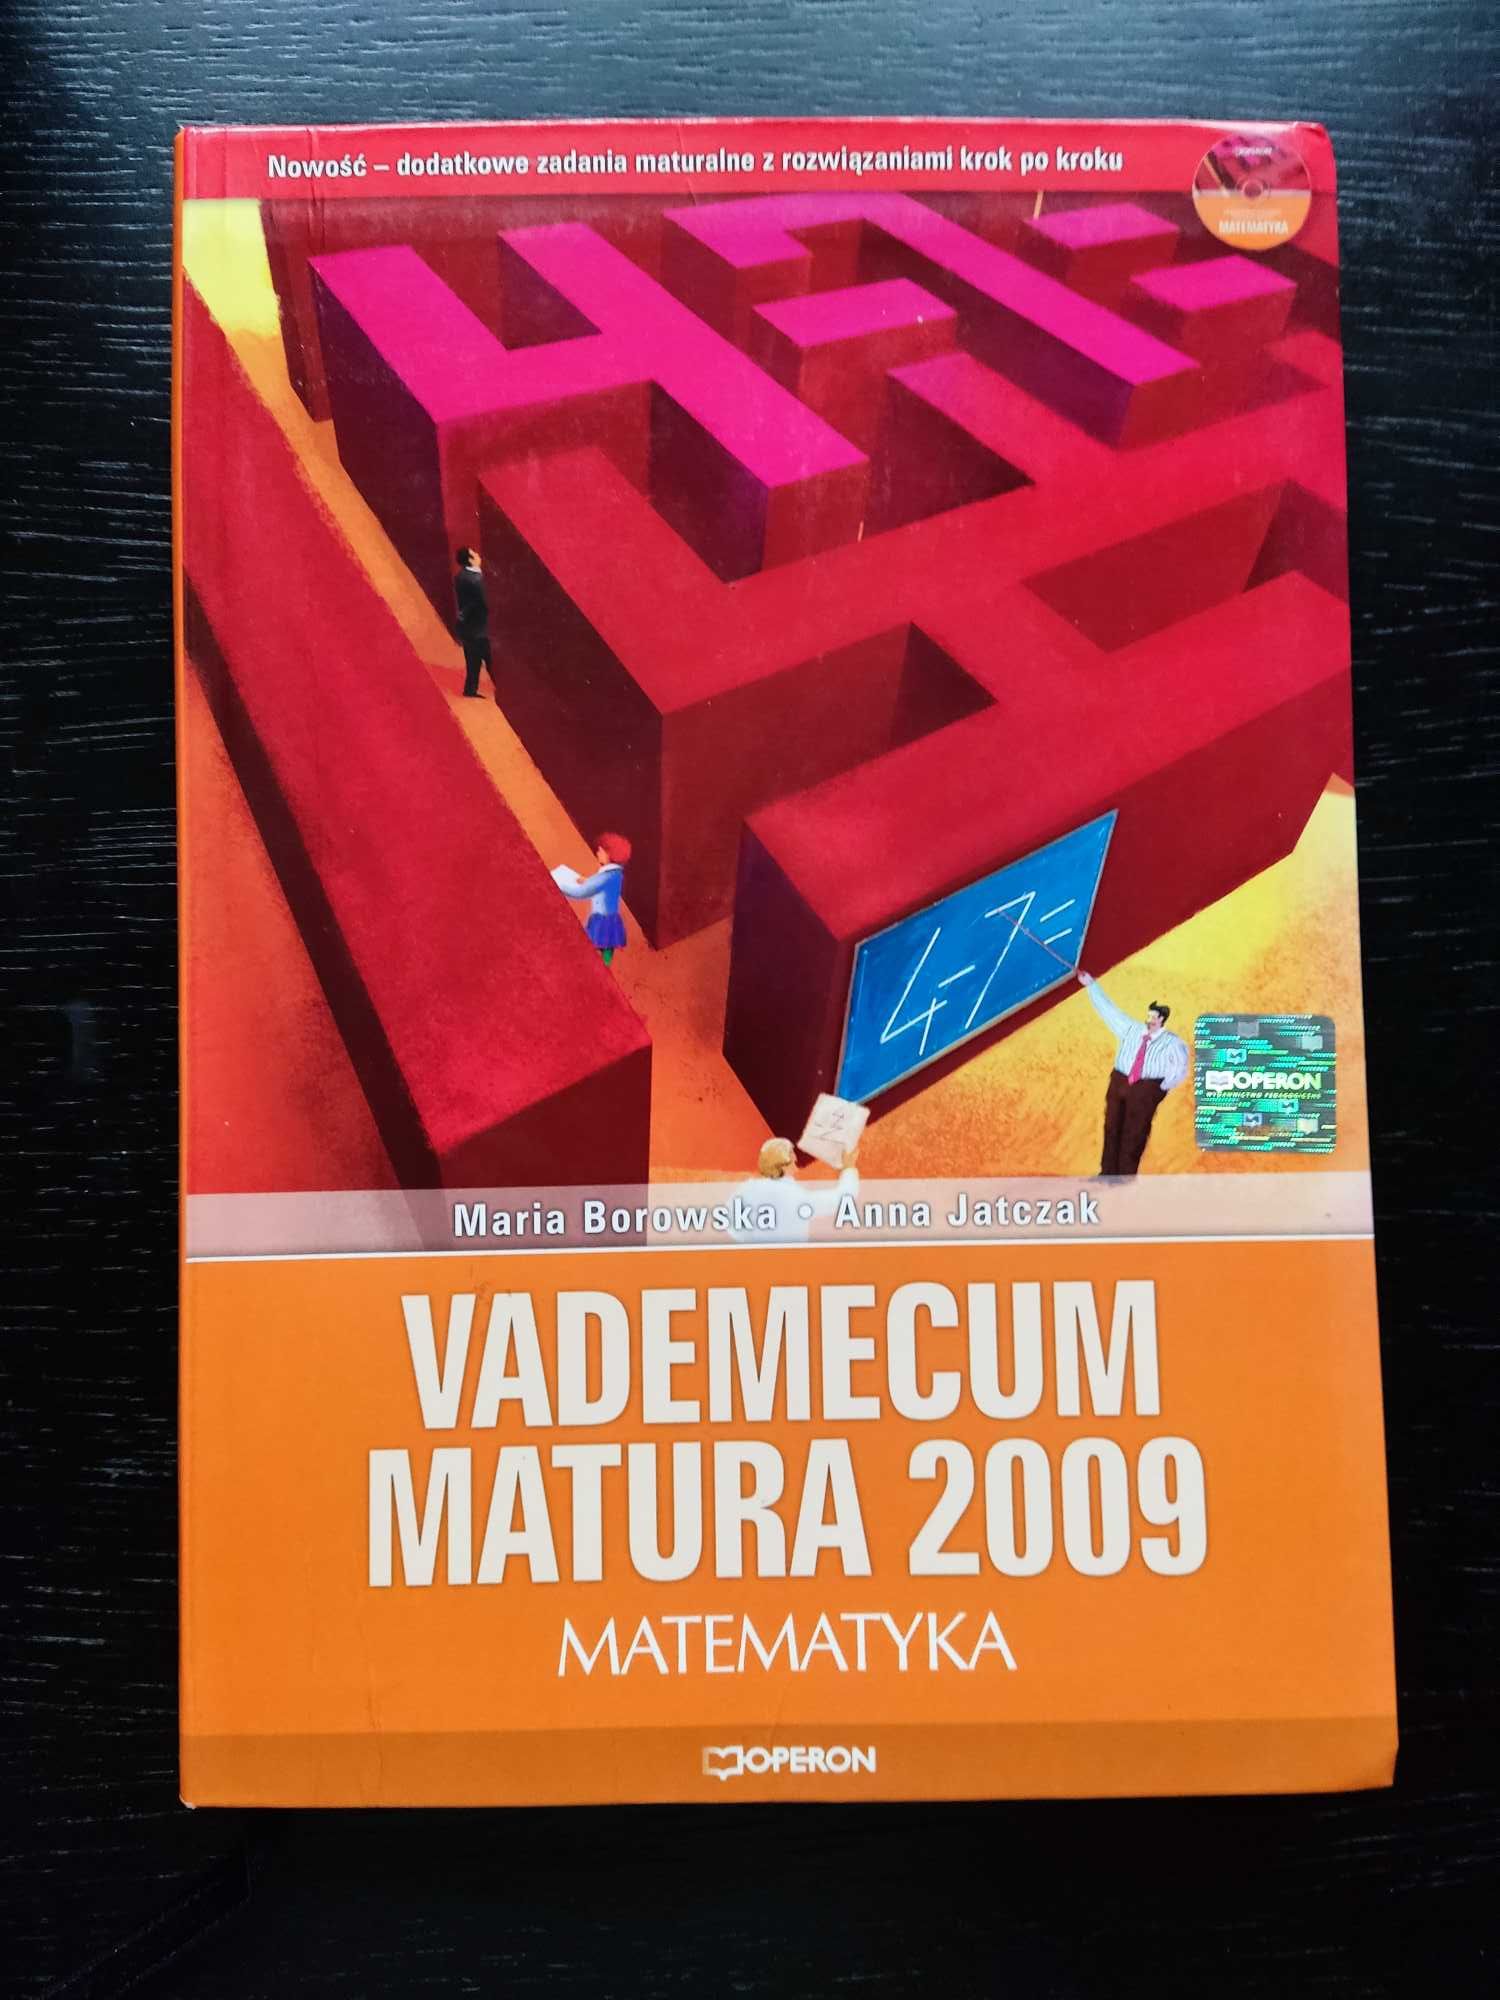 Matematyka - vademecum matura 2009 (z płytą)